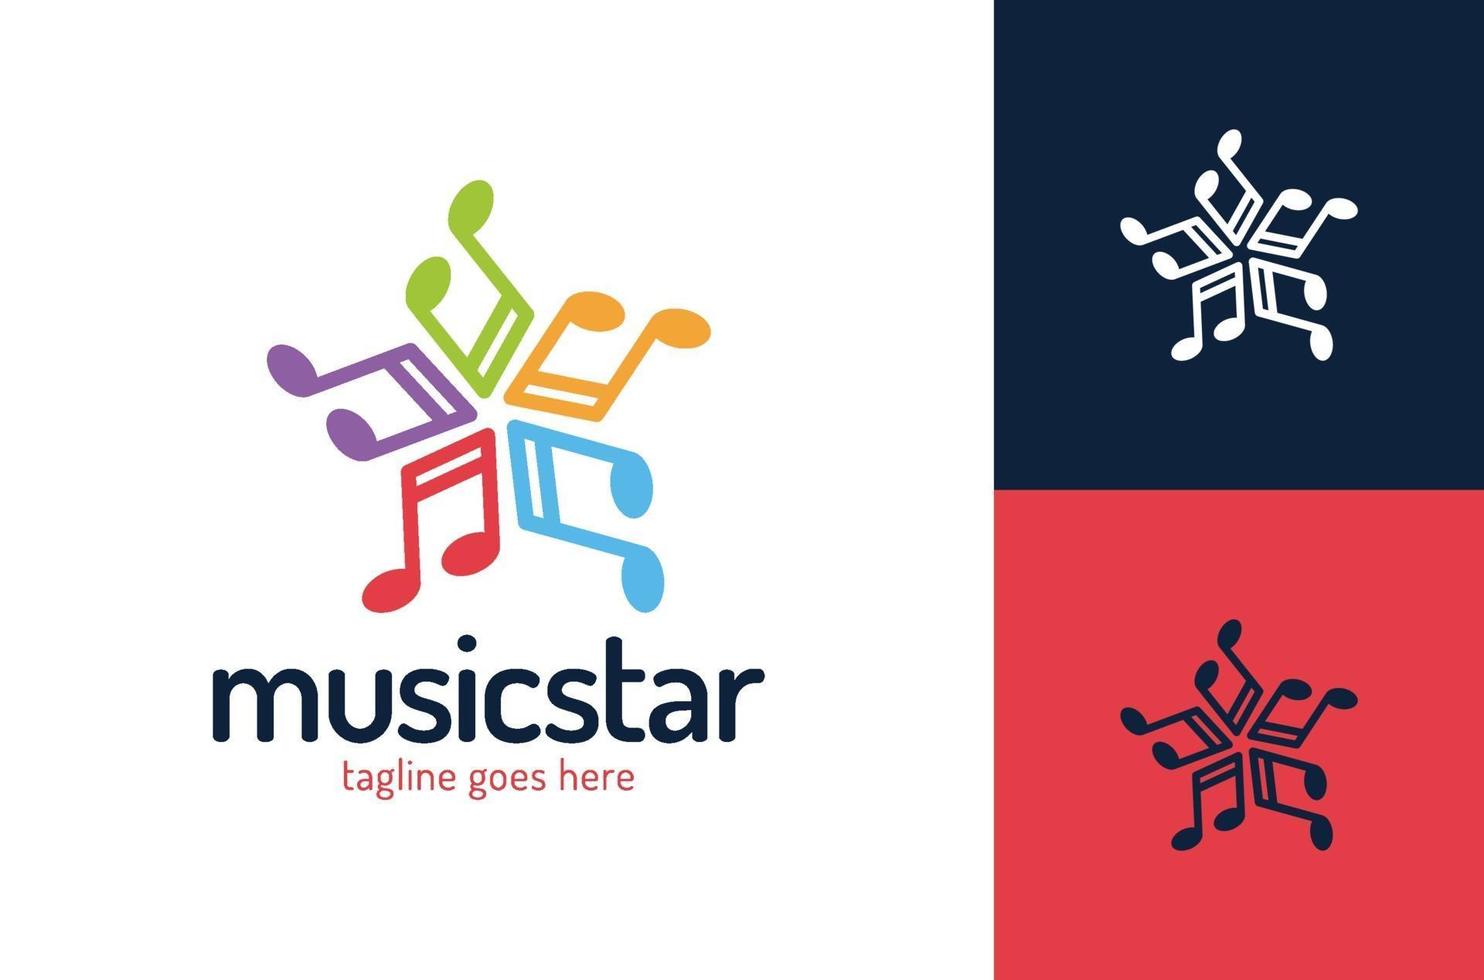 Music star logo vector design template. Star music logotype, playful modern logo style